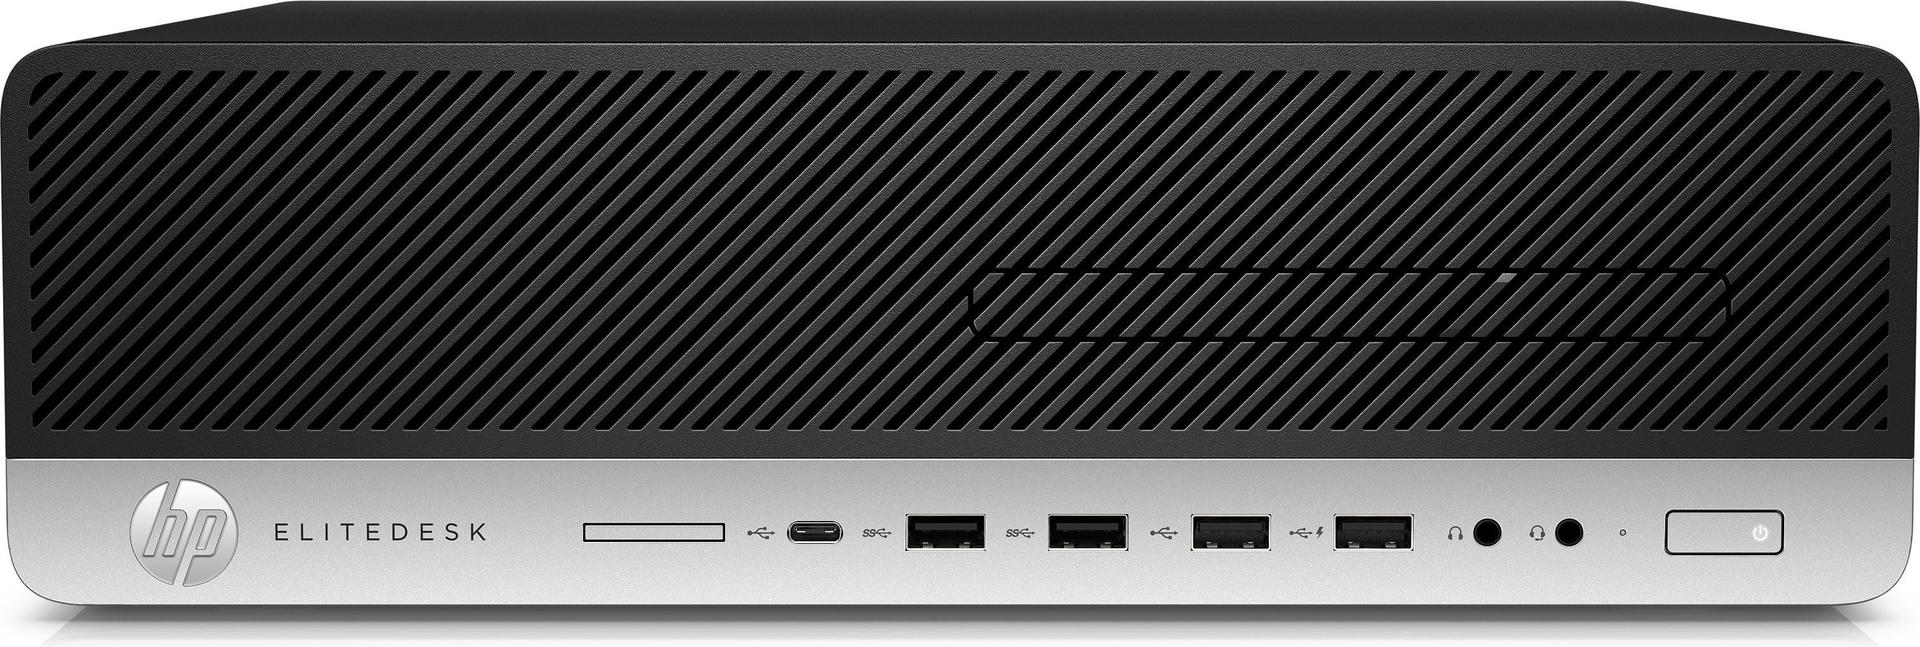 HP EliteDesk 800 G4-Small-Form-Factor-PC (4KW51EA#ABD)